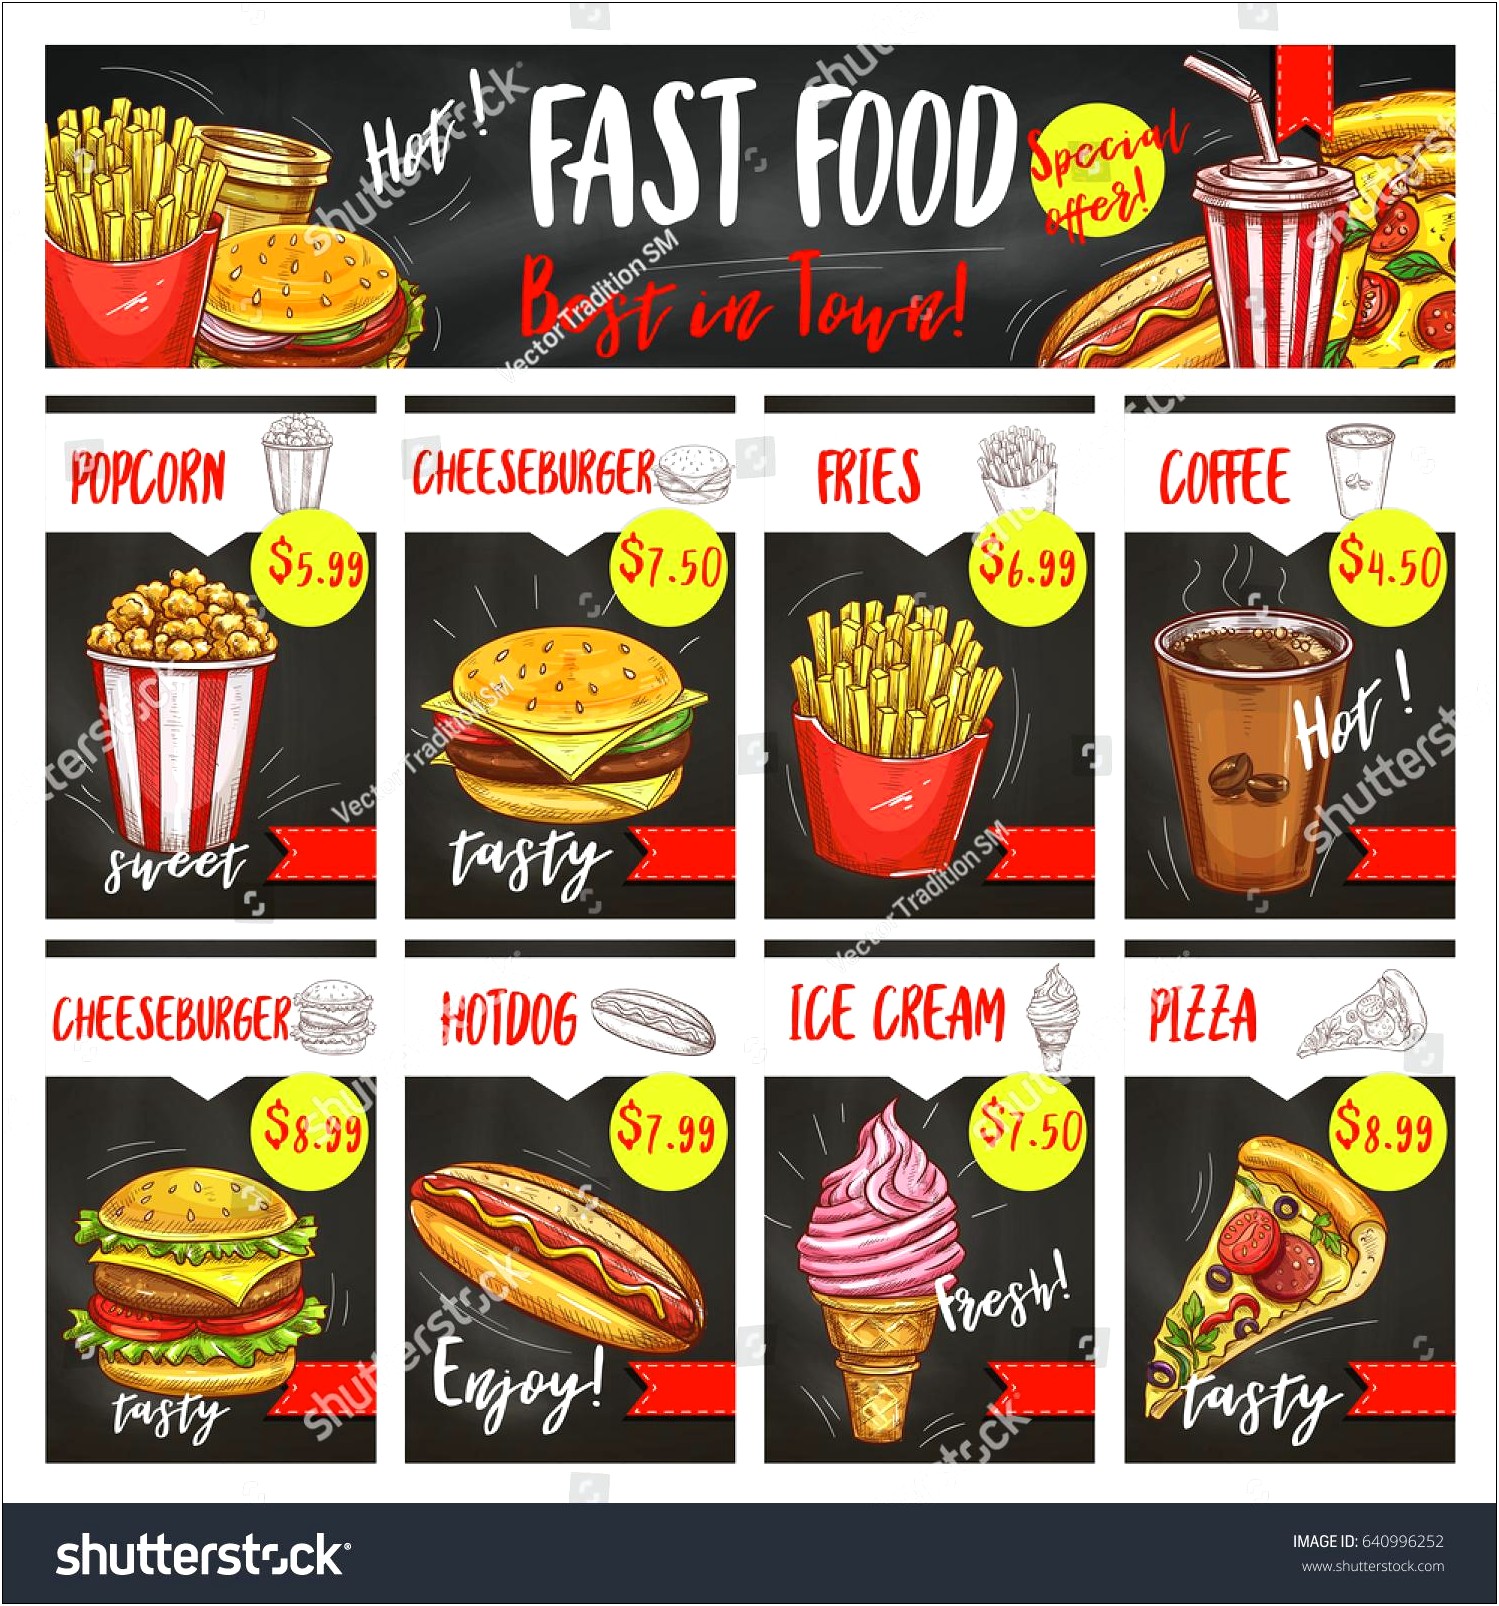 Fast Food Menu Design Templates Free